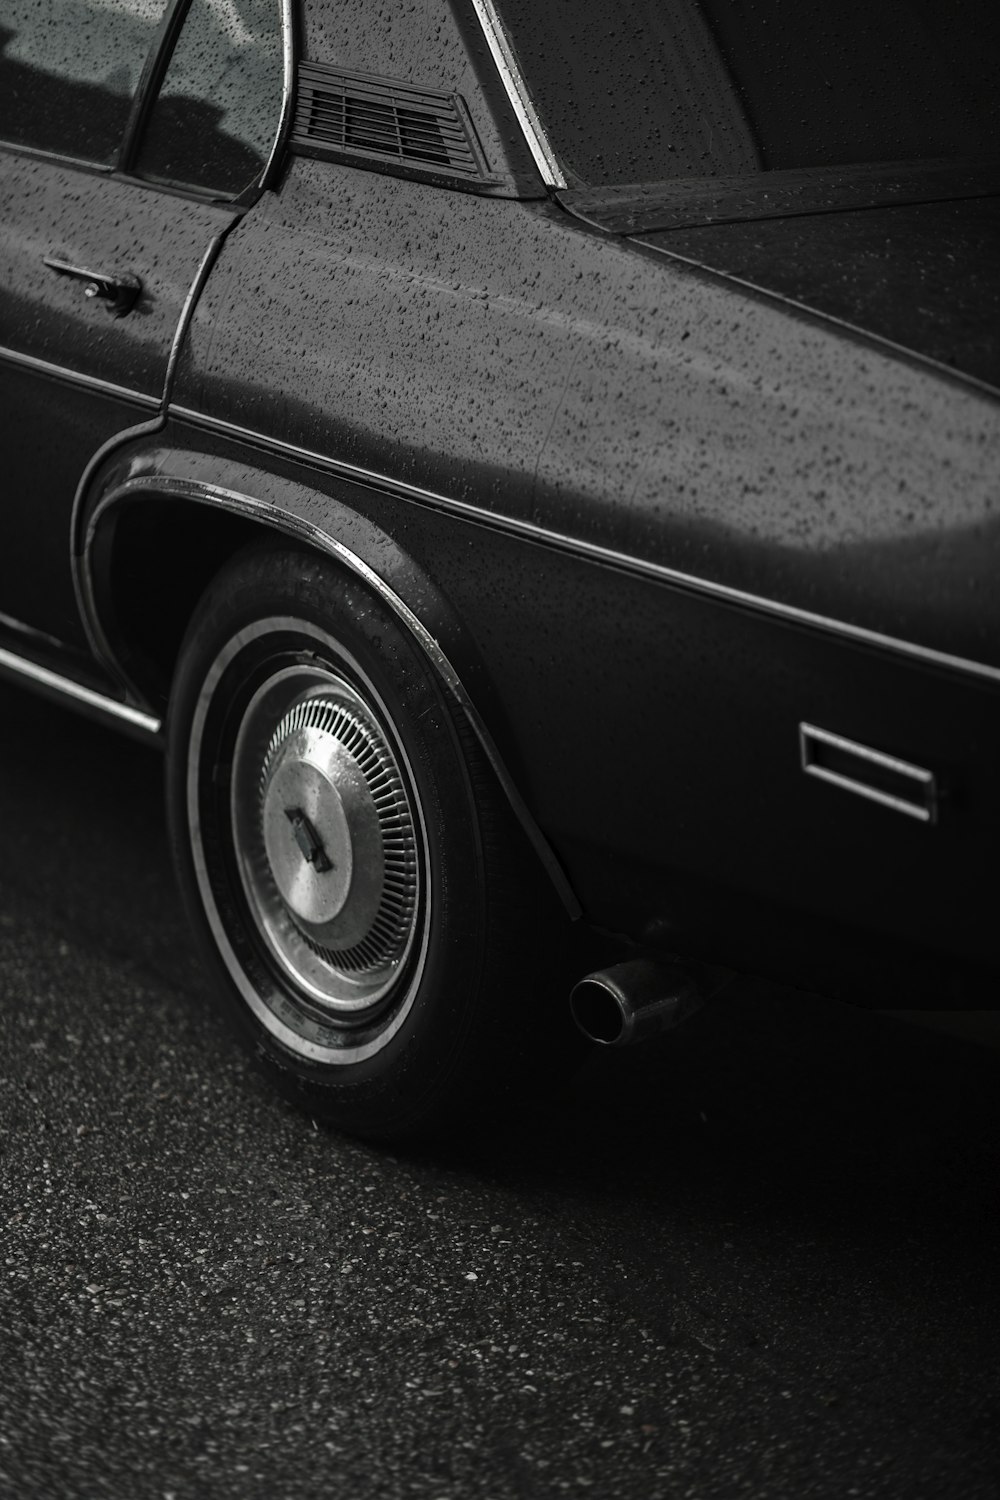 black audi a 4 coupe photo – Free Automobile Image on Unsplash